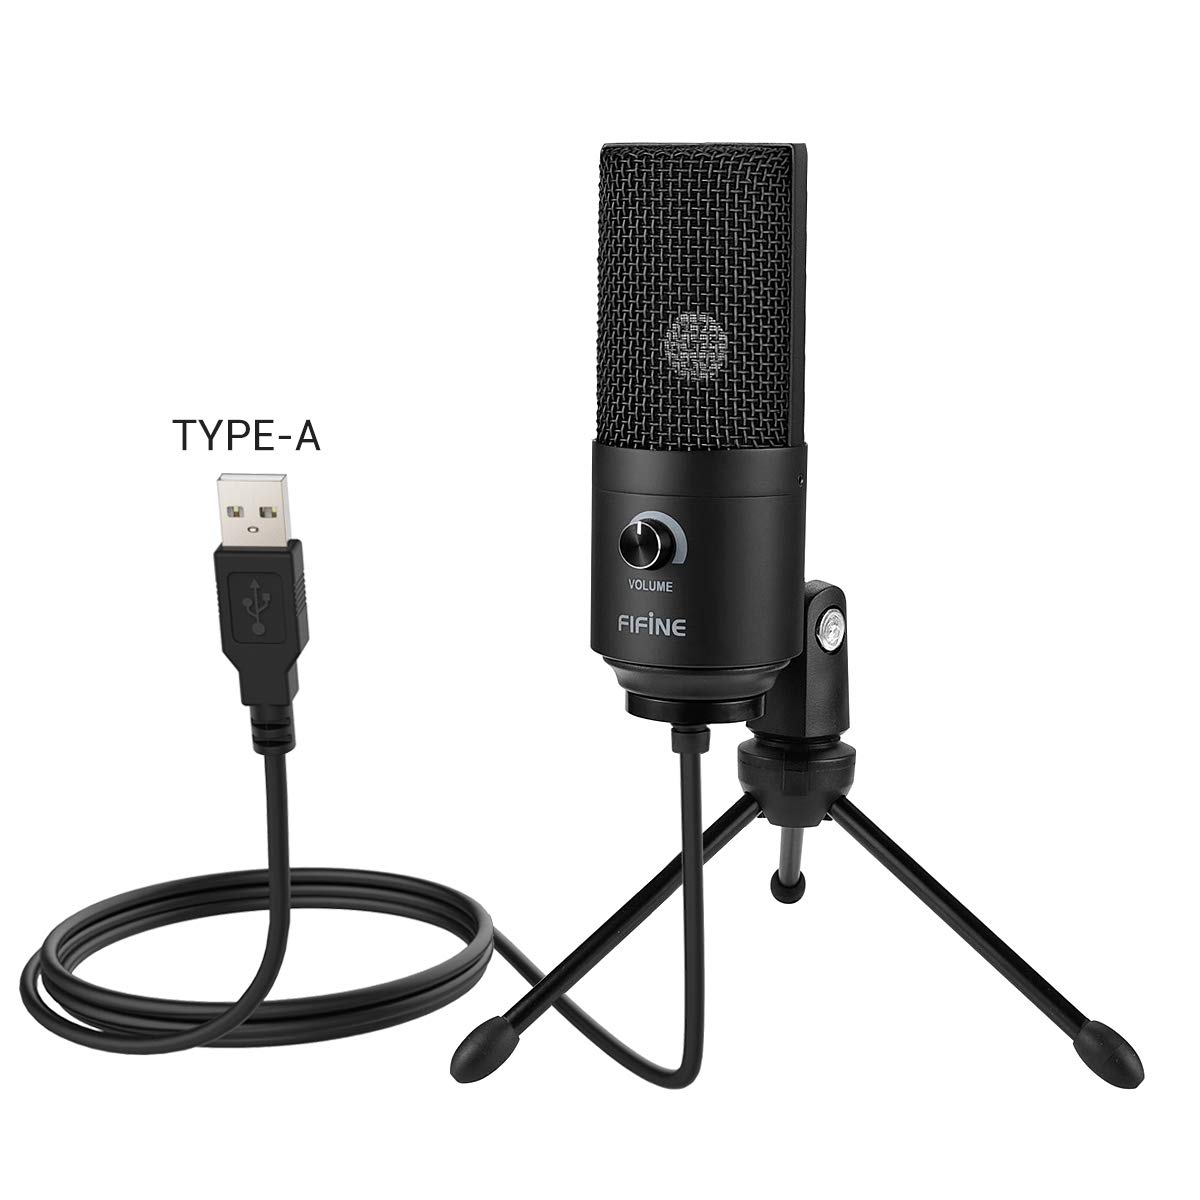 install usb microphone